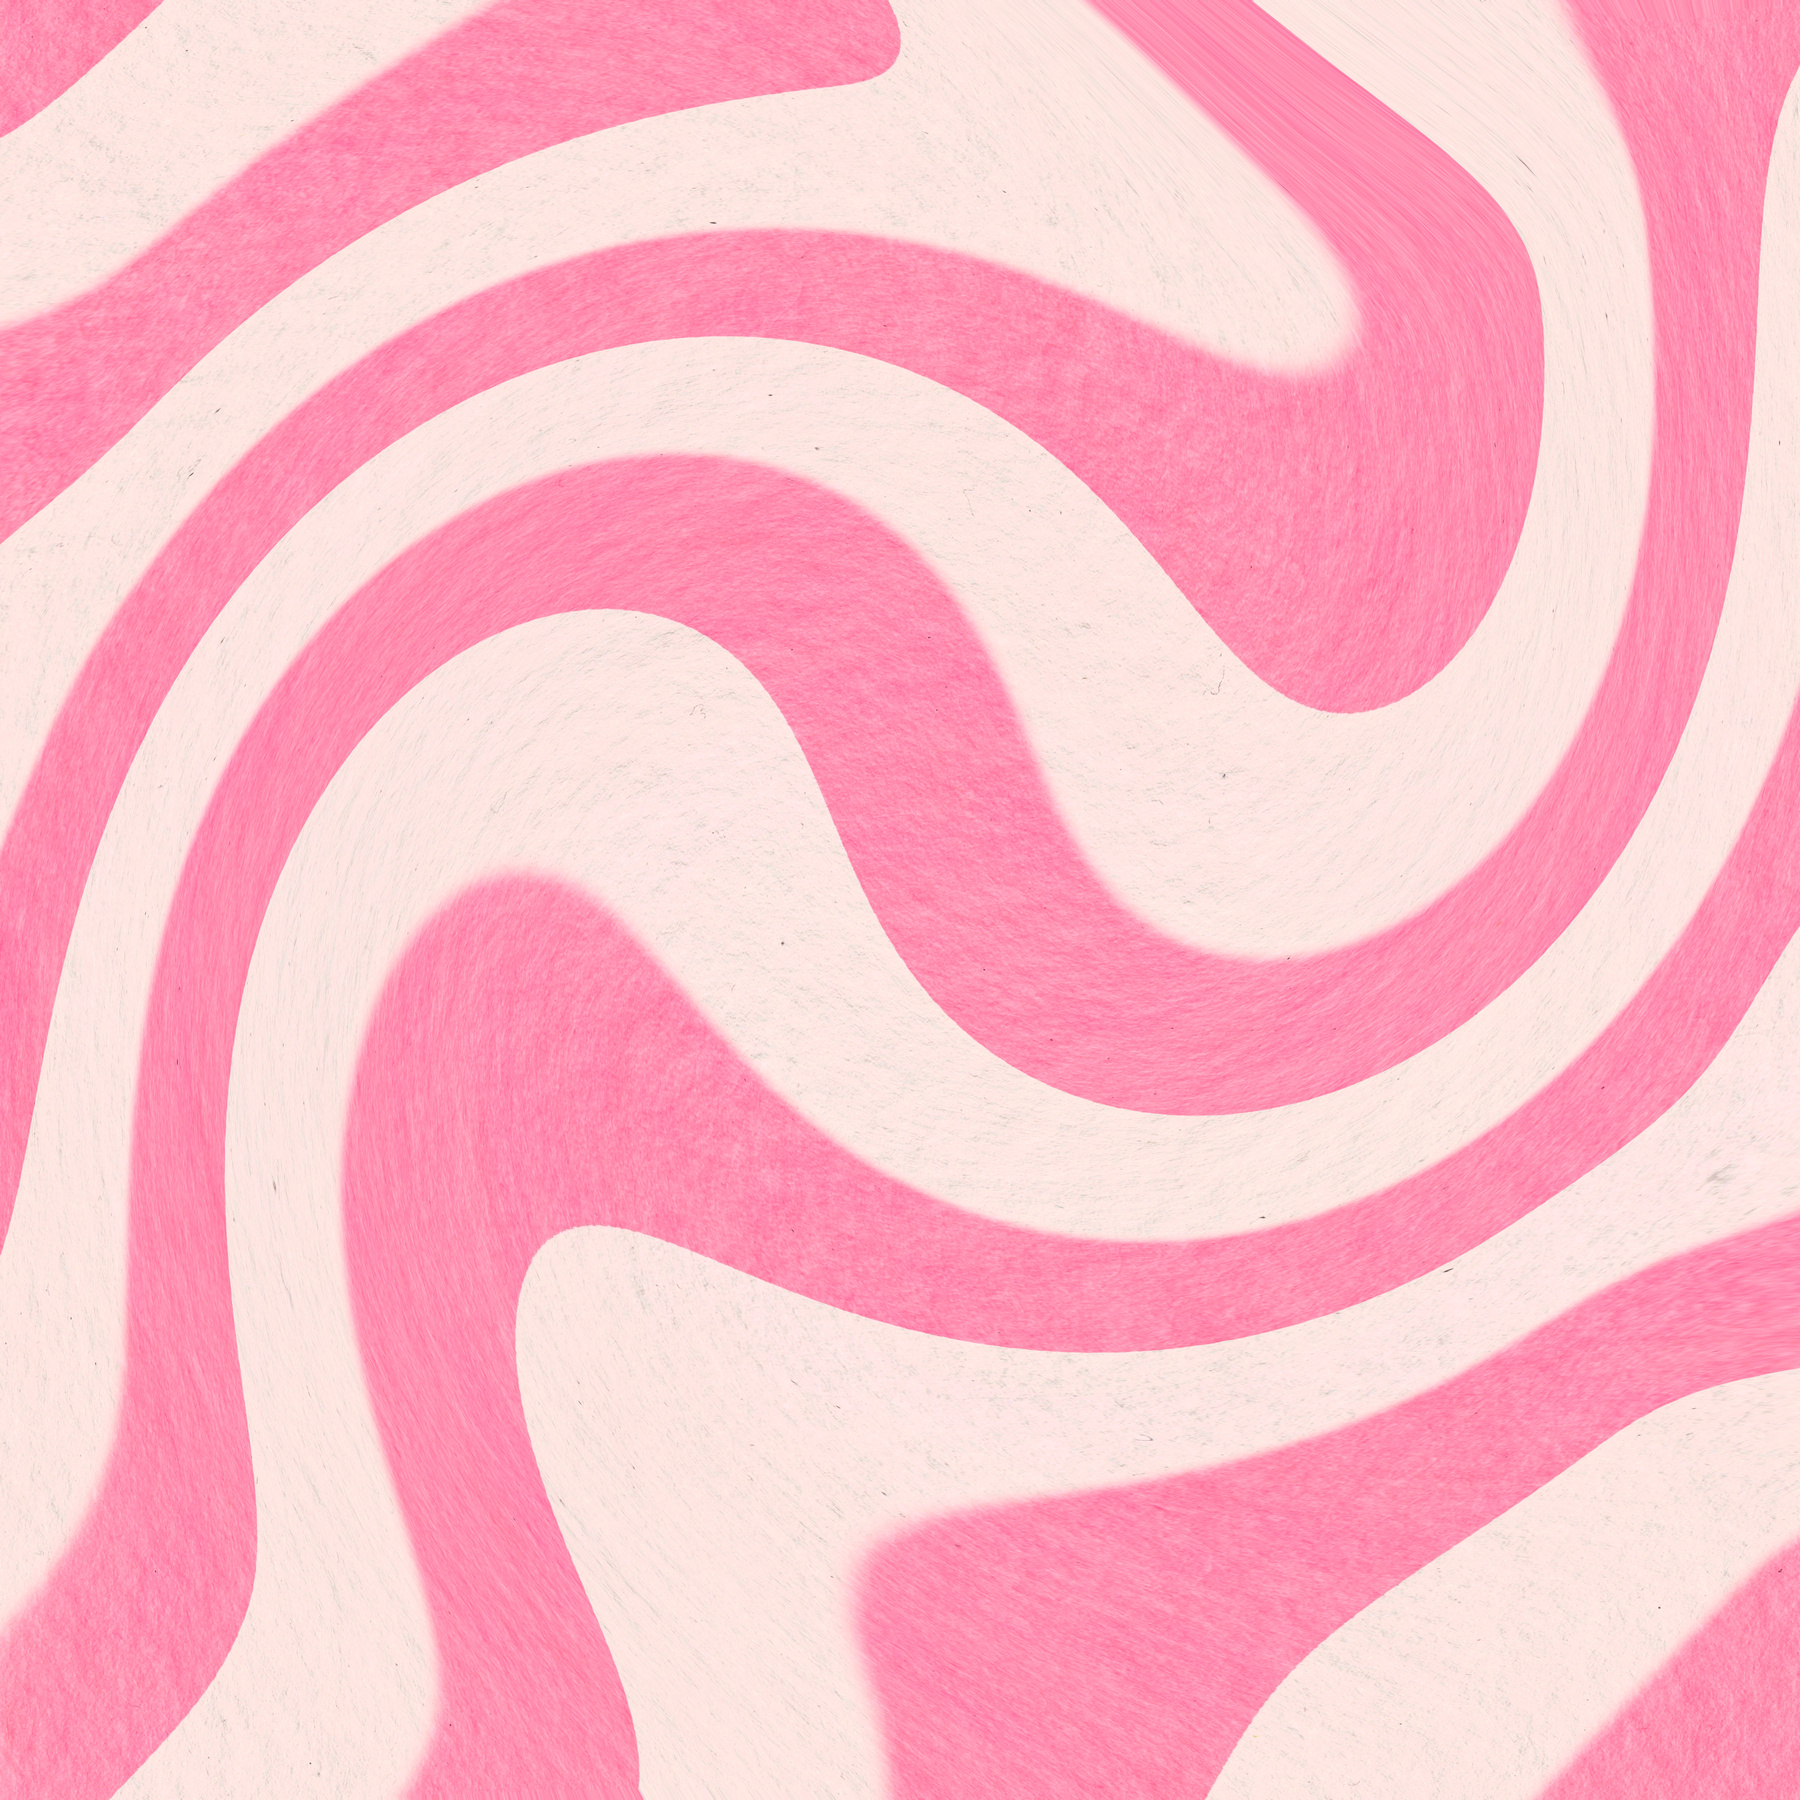 Stripe 2 3 Pink 6 Liquid Groovy Background Illustration Wallpaper Texture